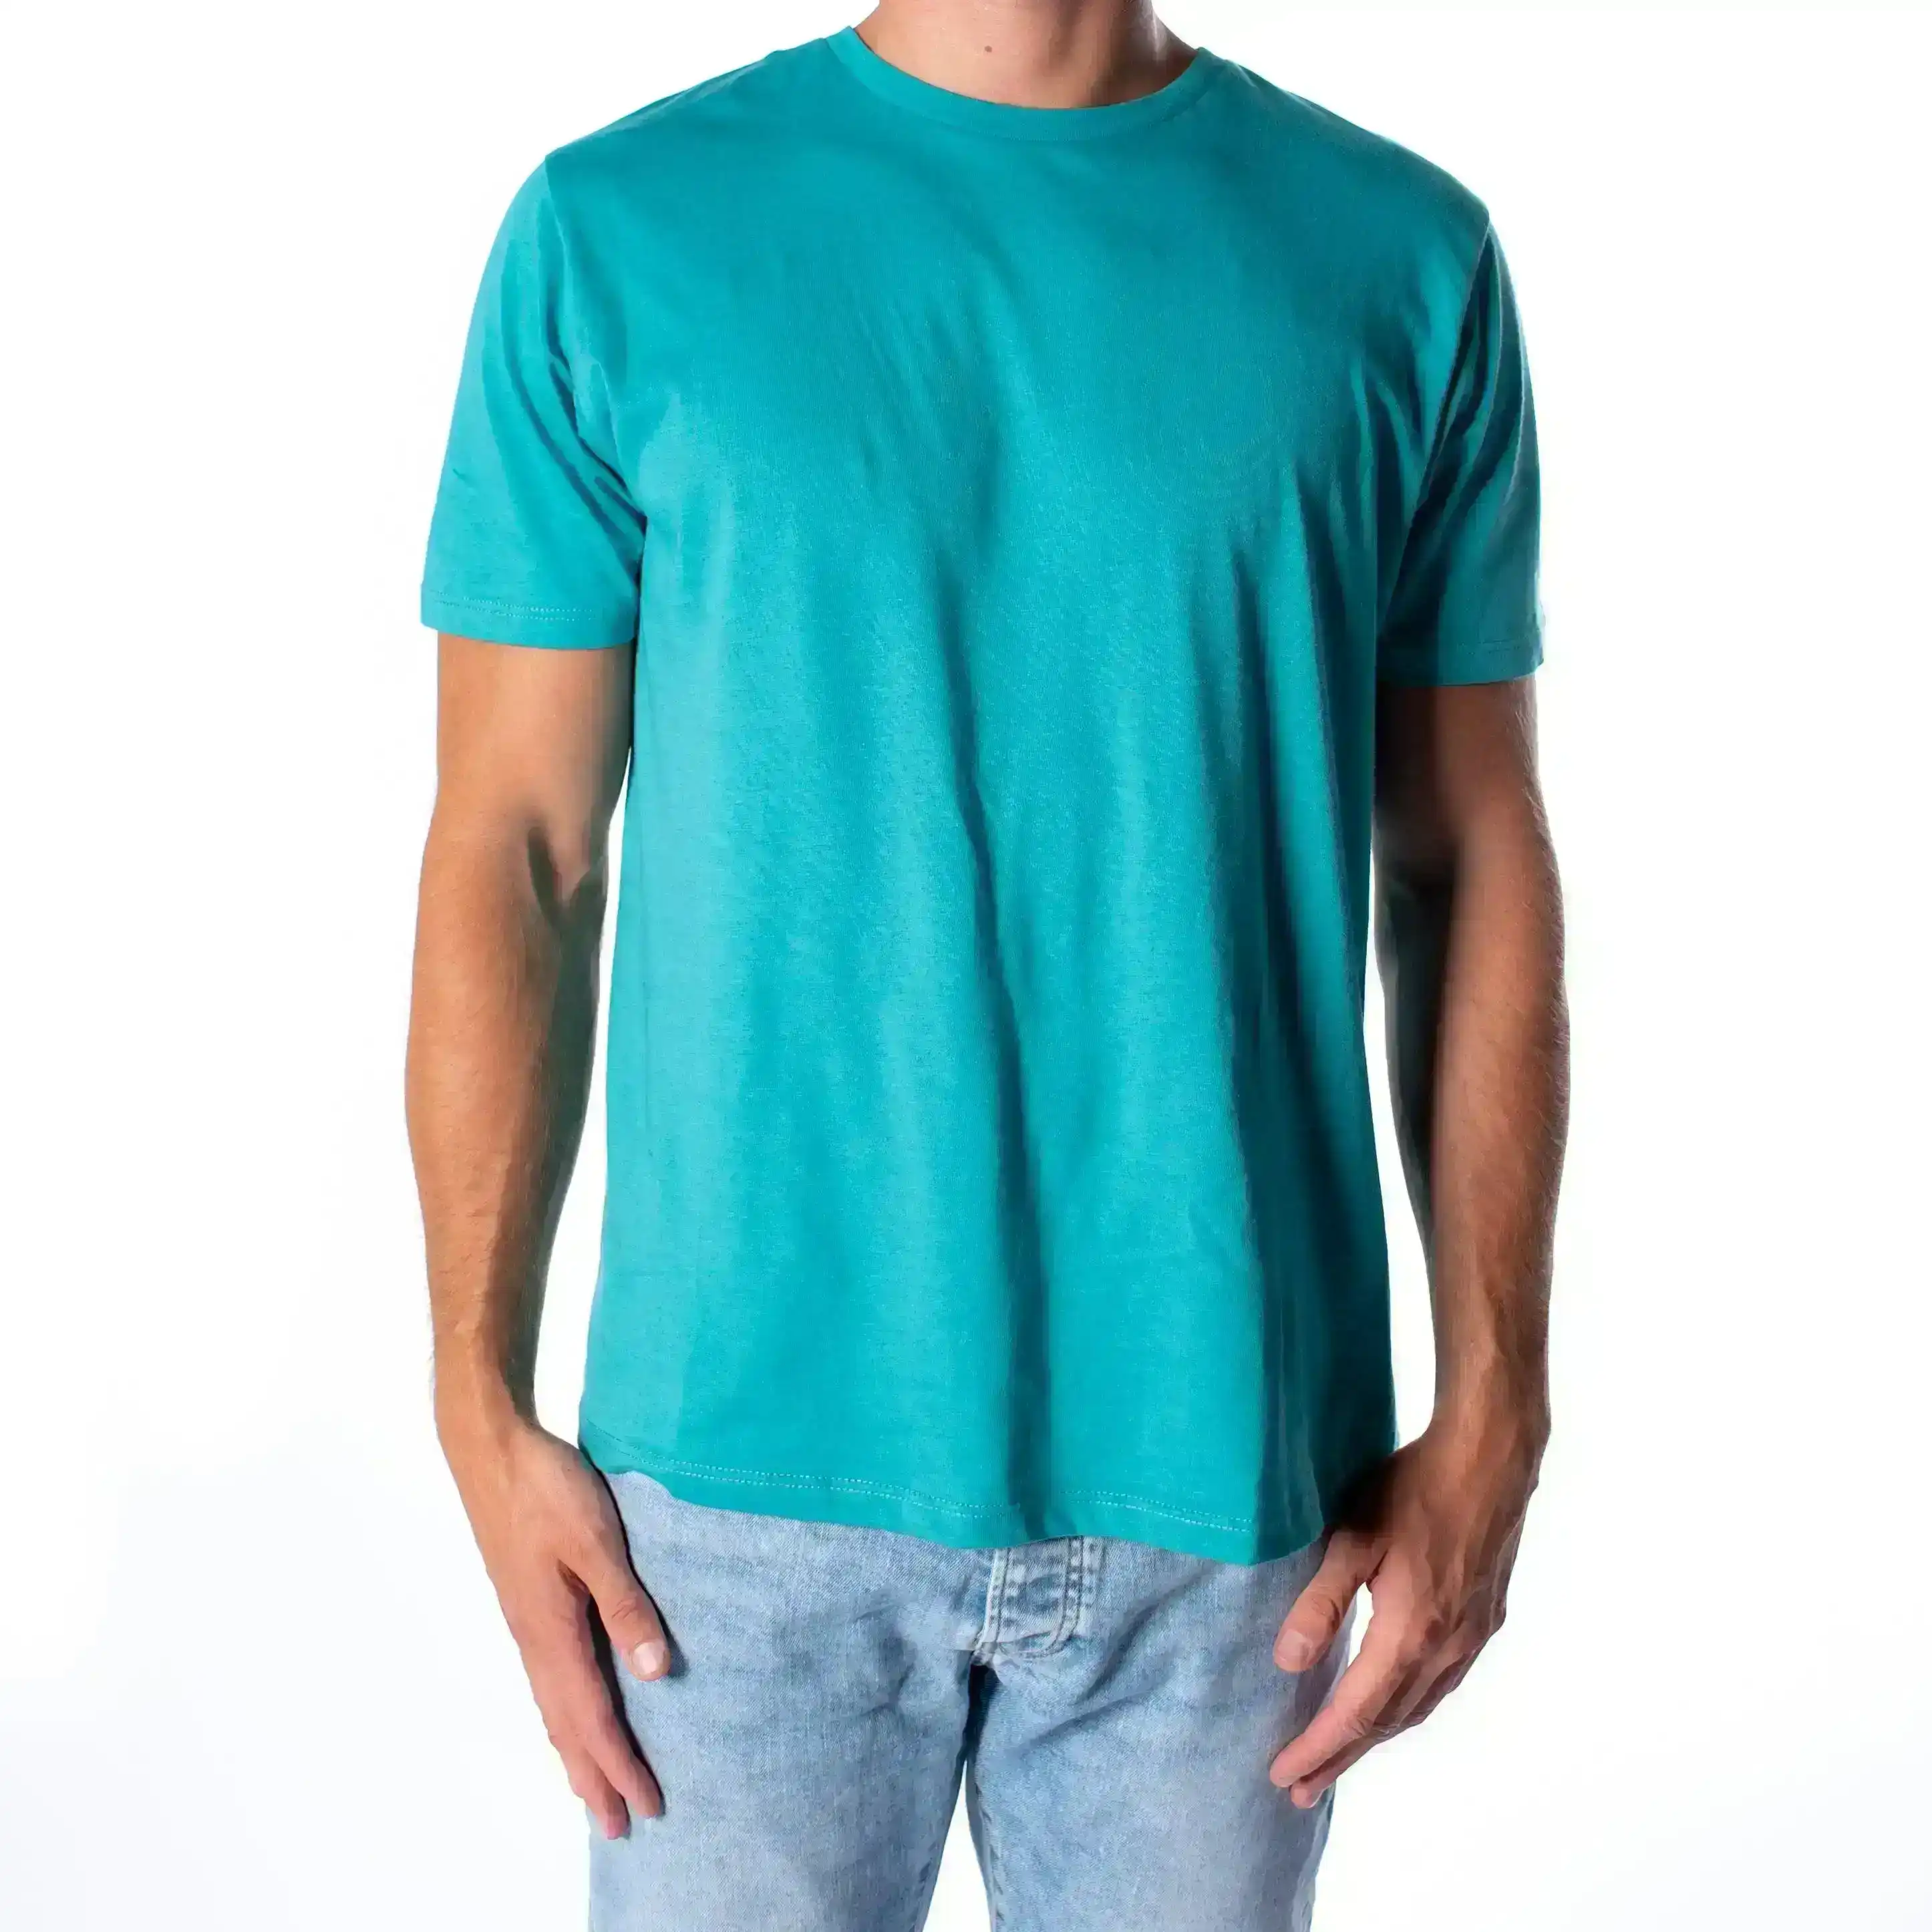 Topman Men's Regular Fit Teal Green T-Shirt